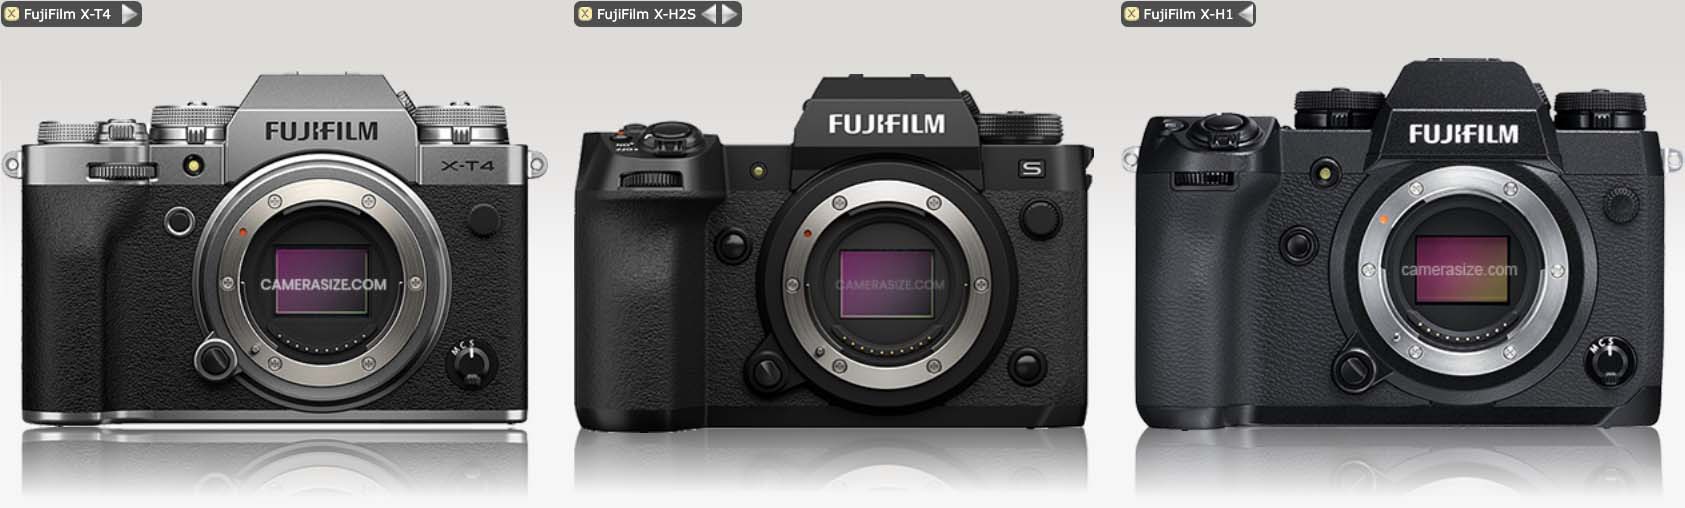 wervelkolom Hassy kwaadaardig Fujifilm X-H2S Flagship Camera and New Lenses Size Comparison - Fuji Addict